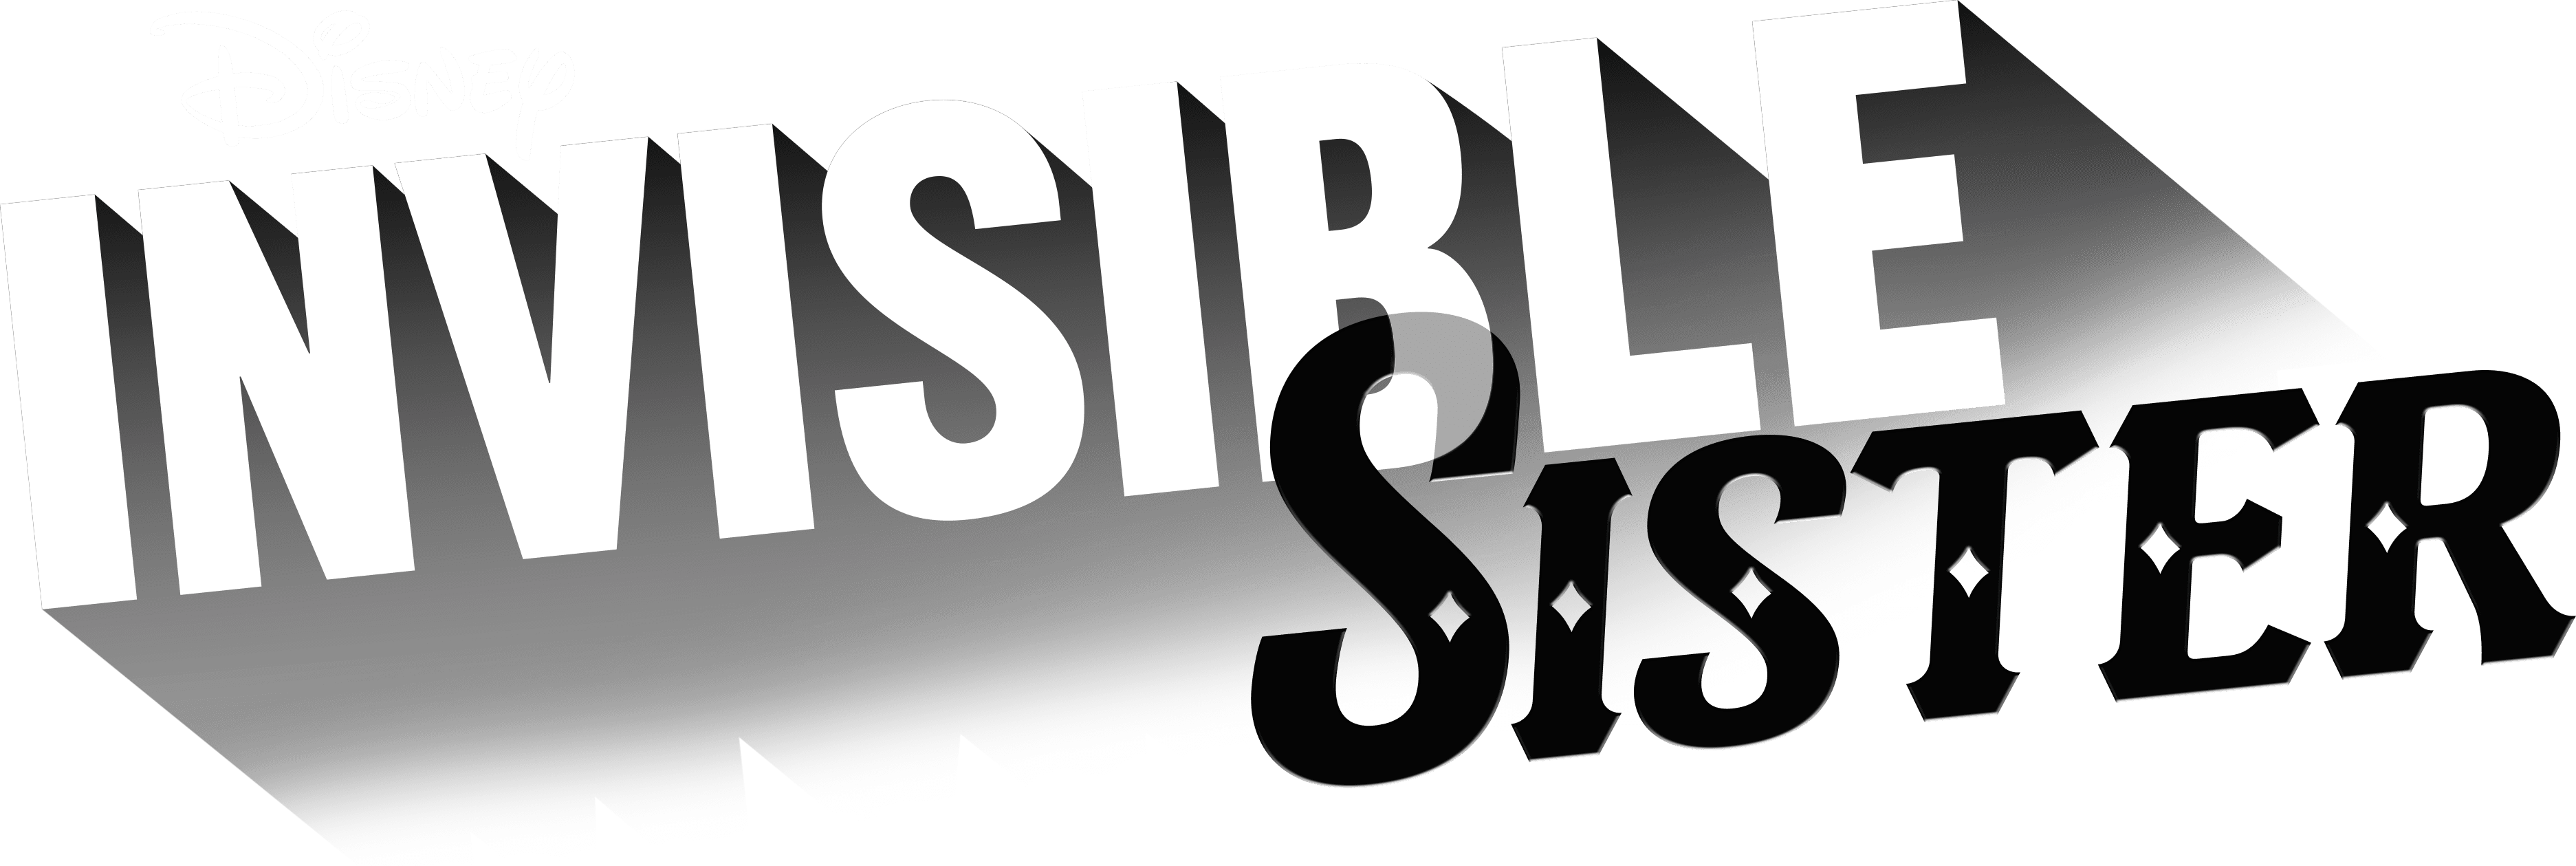 Invisible Sister logo